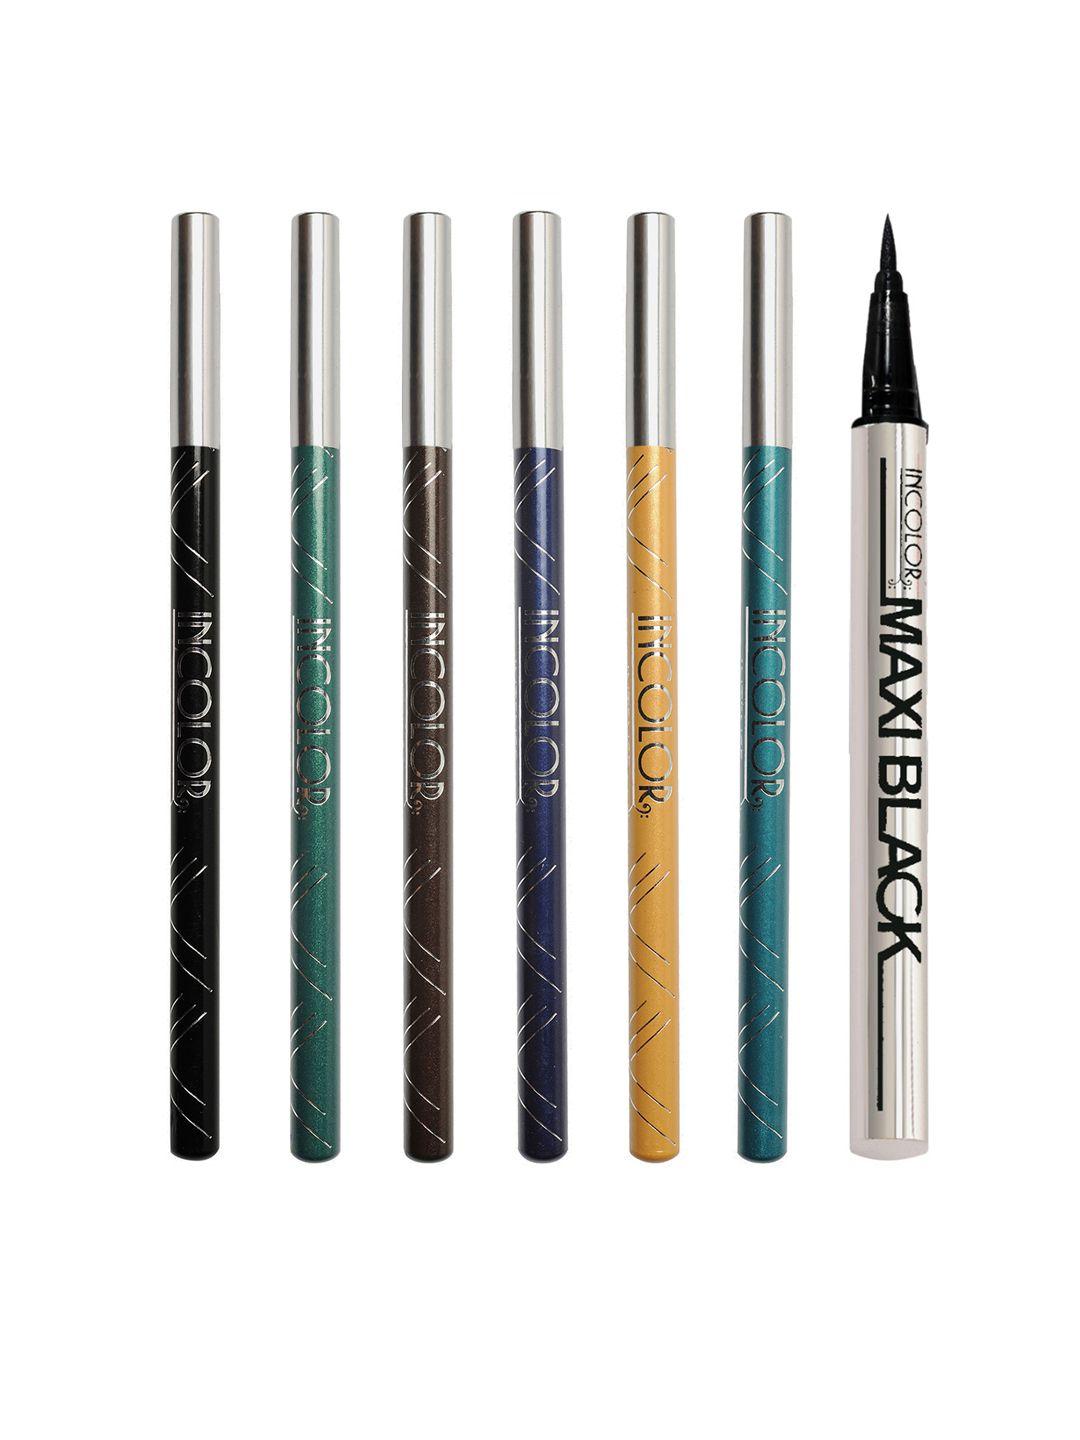 incolor set of intense long-wear eye pencils & maxi pen eyeliner